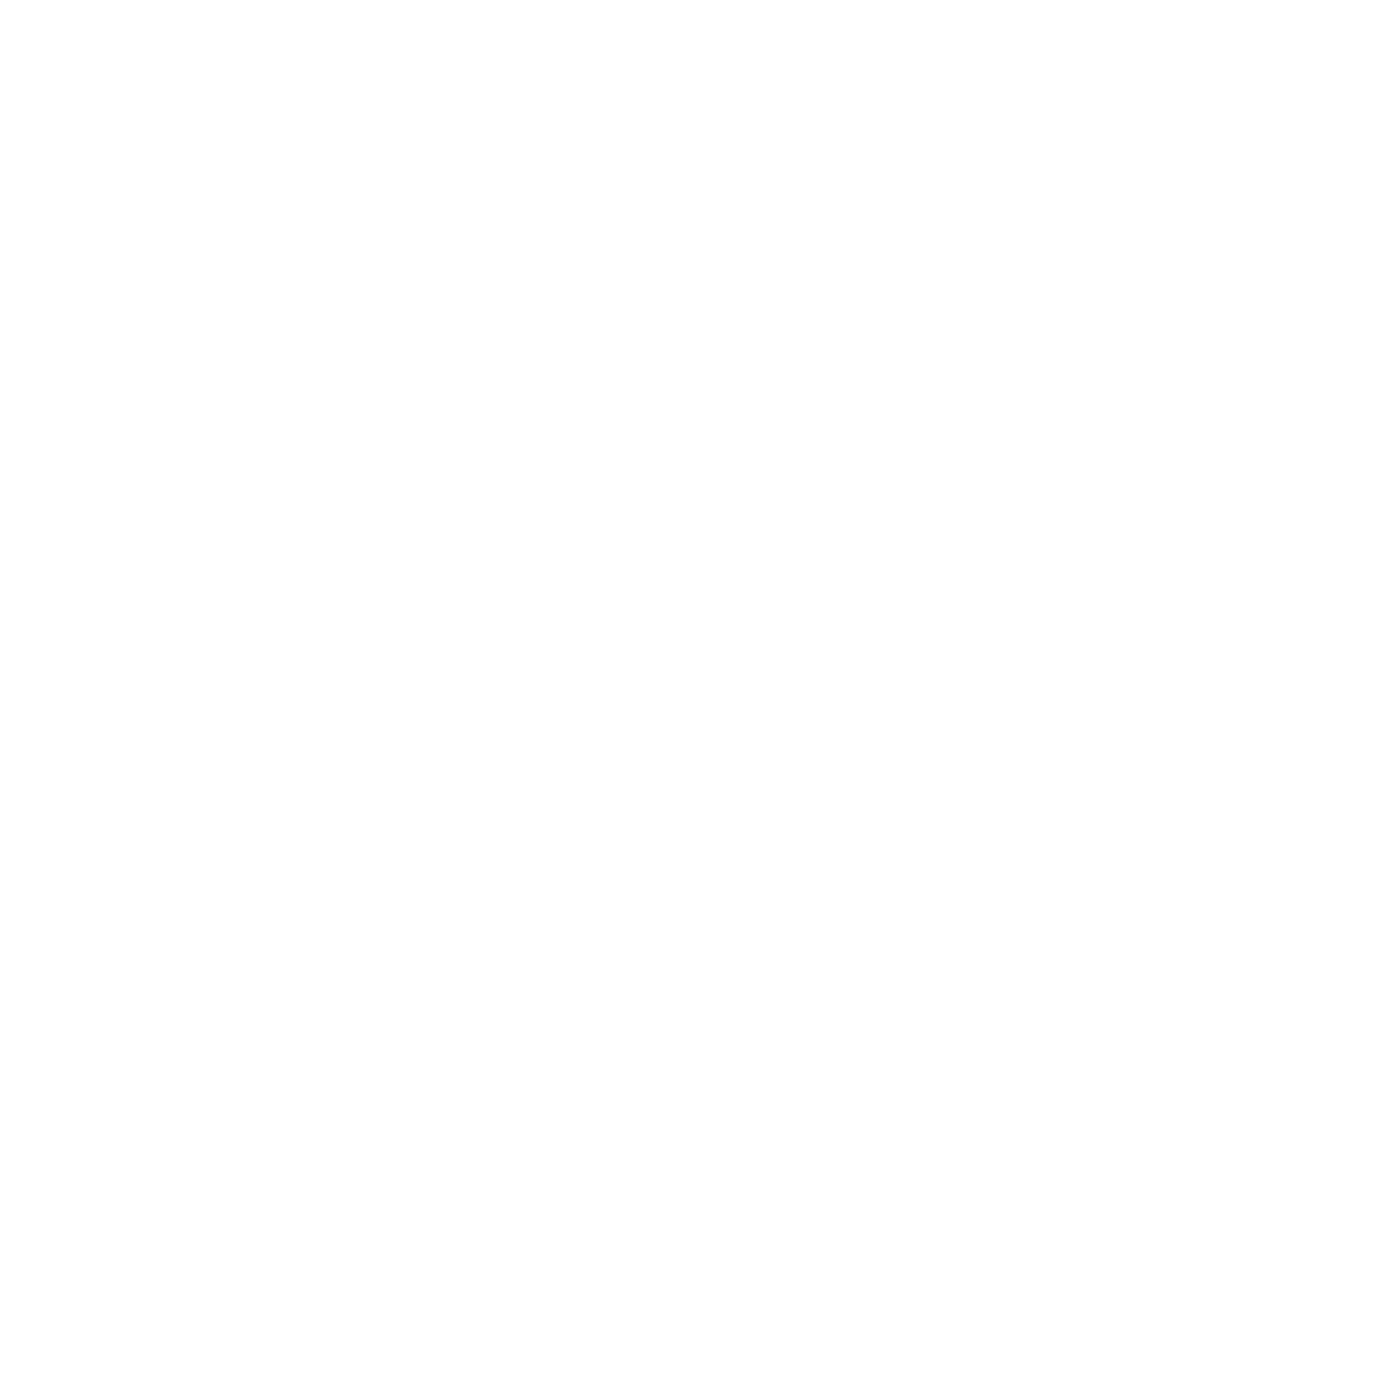 Alex Mason Lighting Design